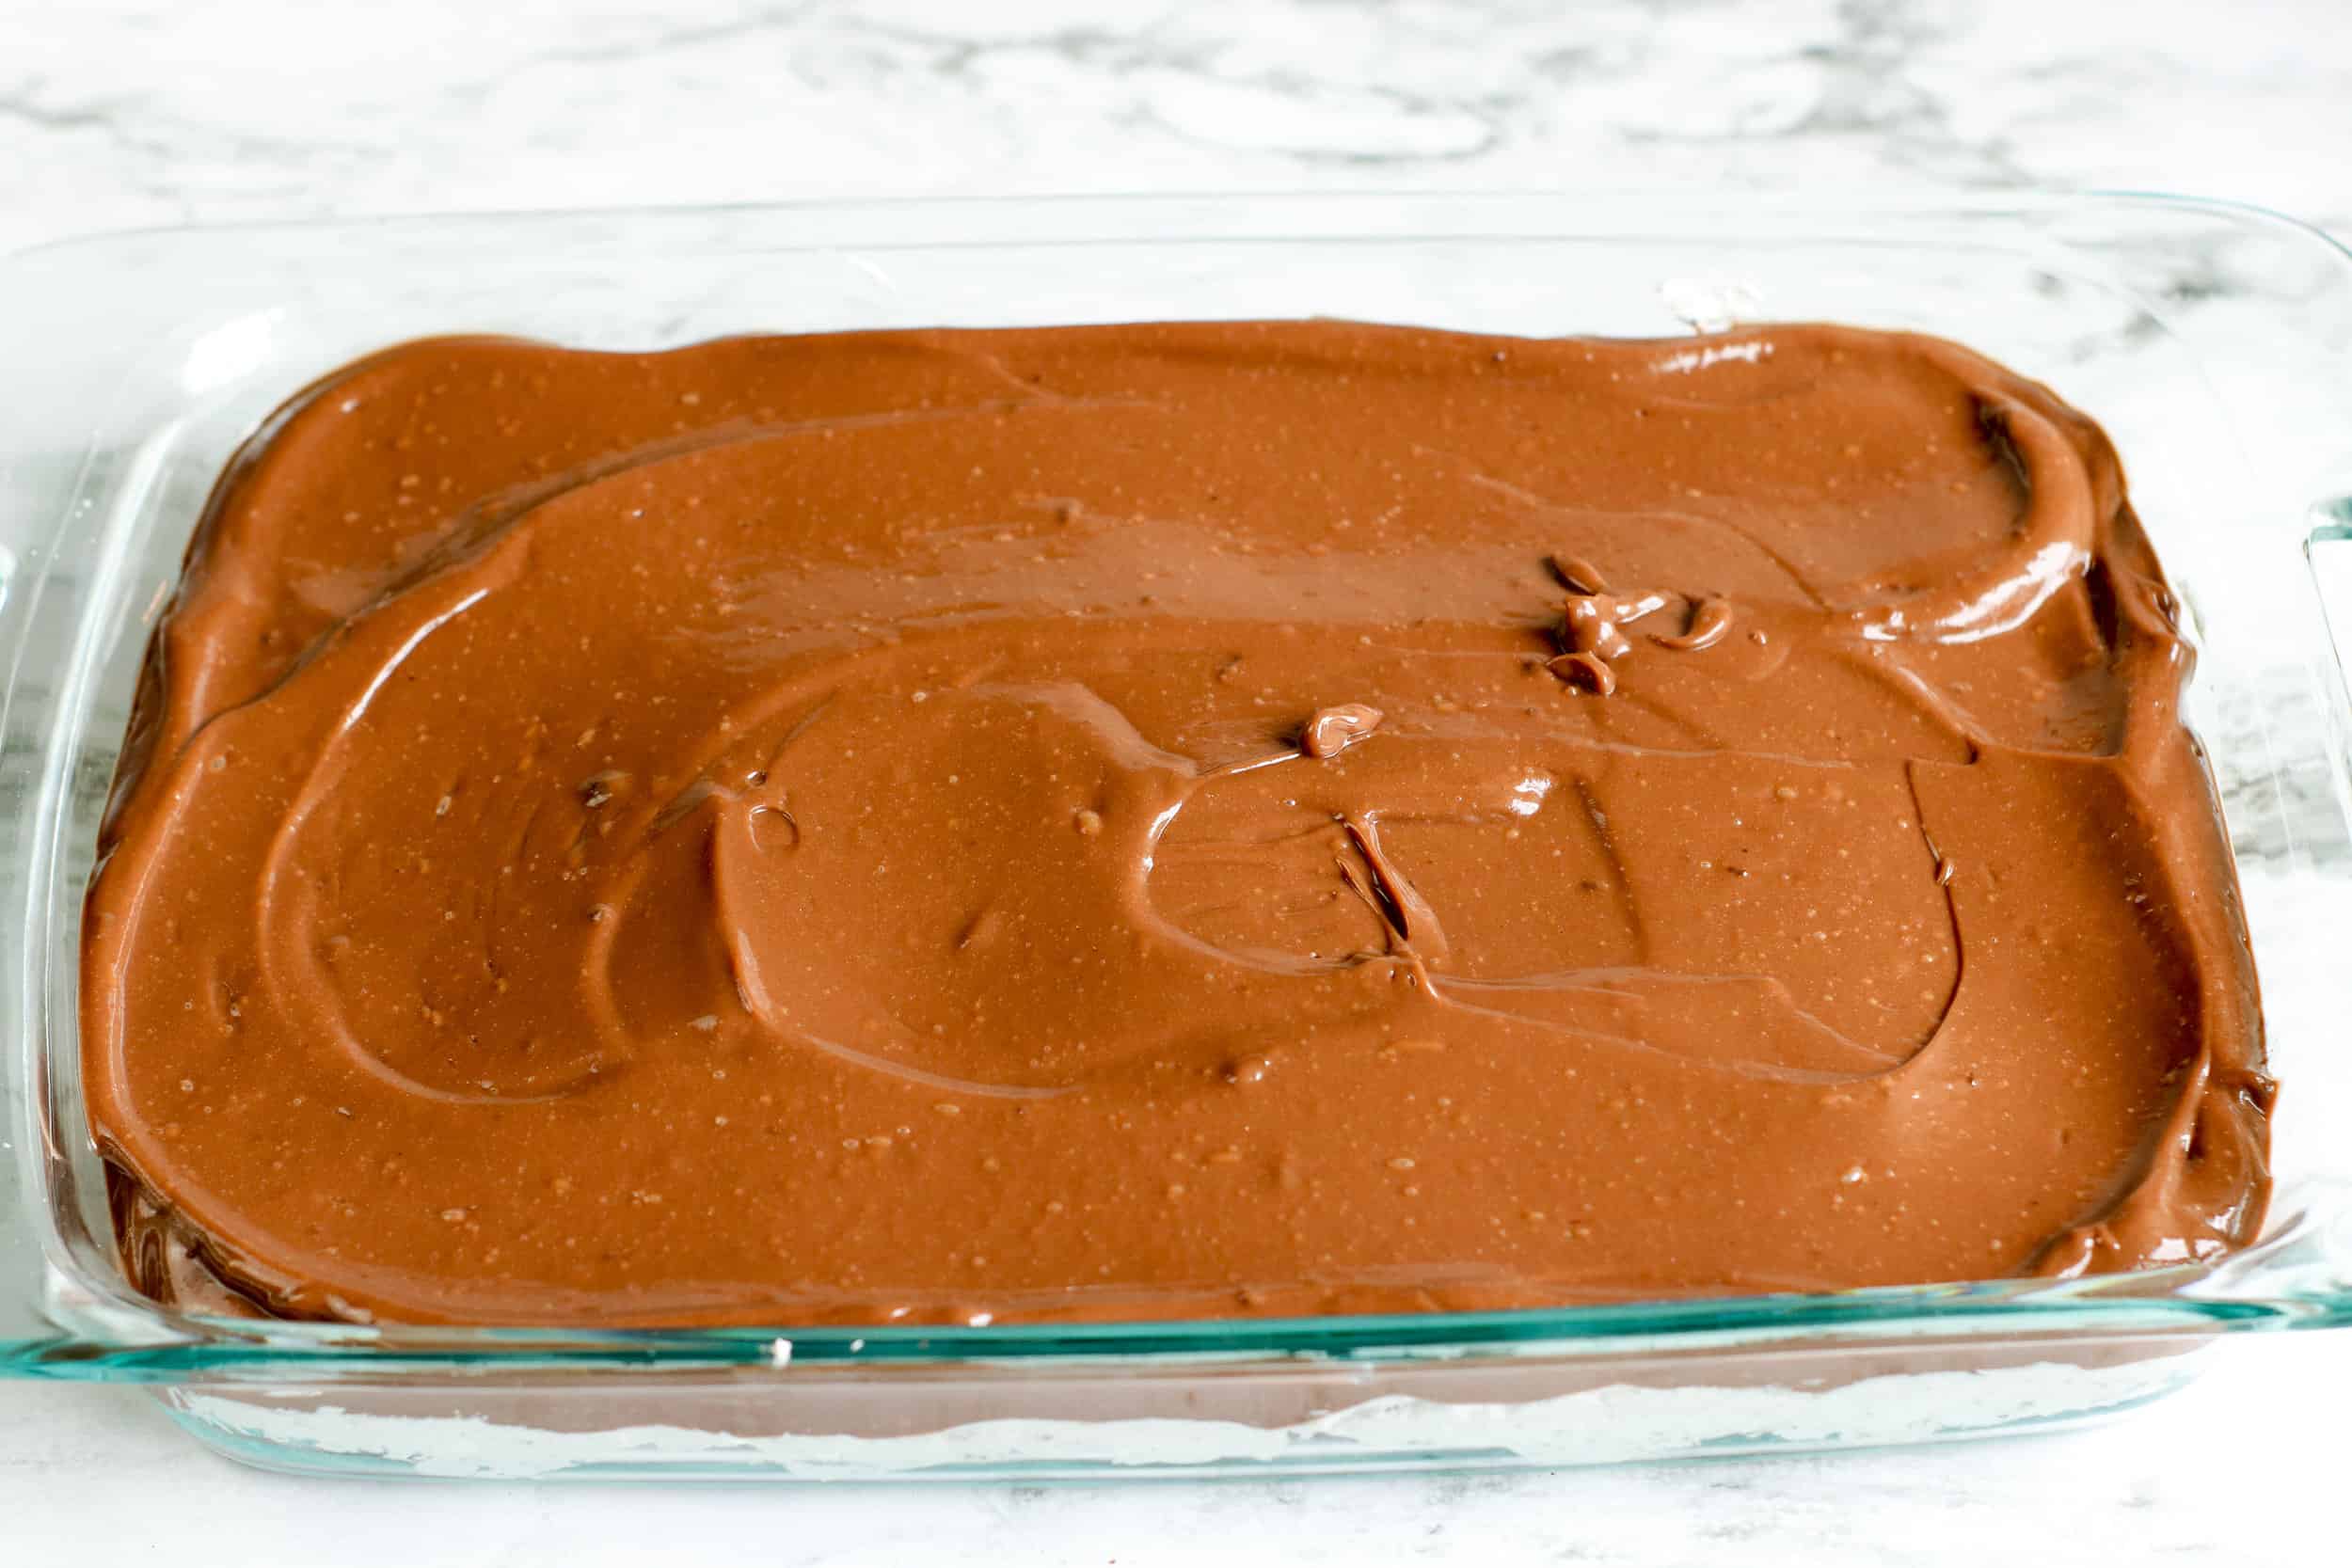 add box of chocolate pudding and milk, stir, then add layer